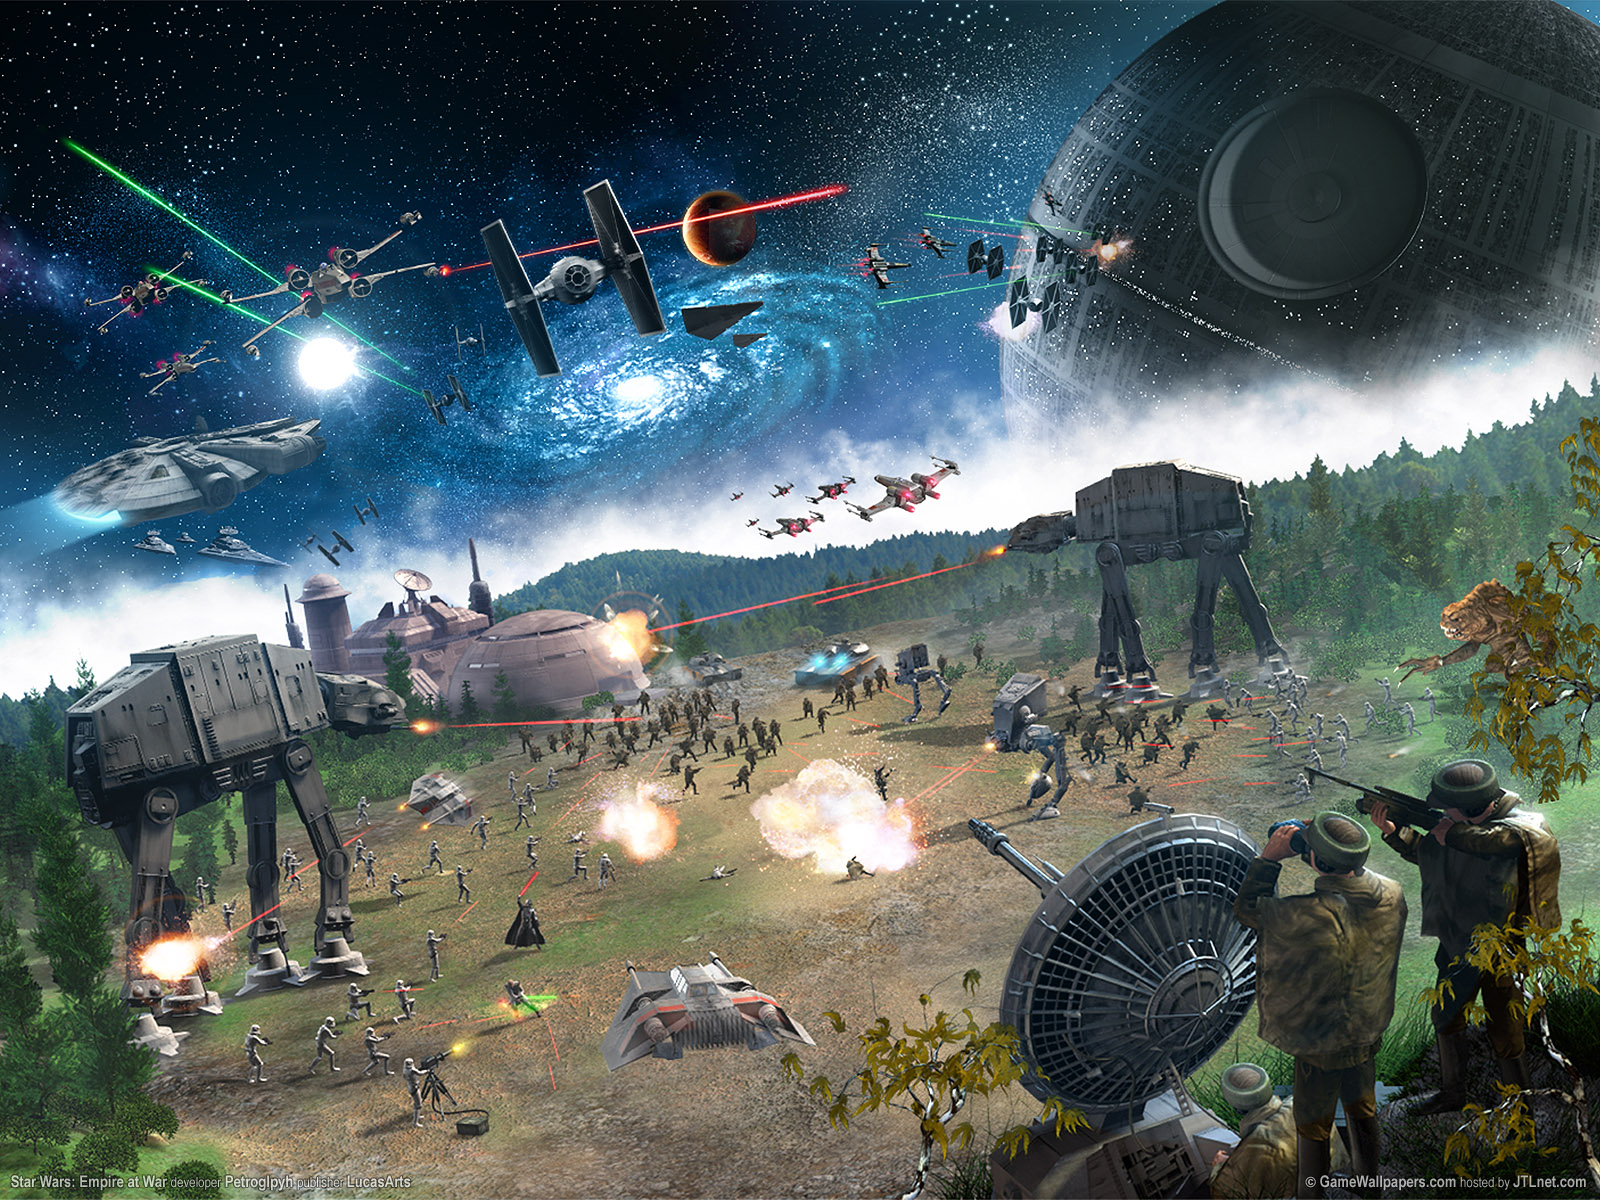 Star Wars Battle Scene Wallpaper and Background Image 1600x1200